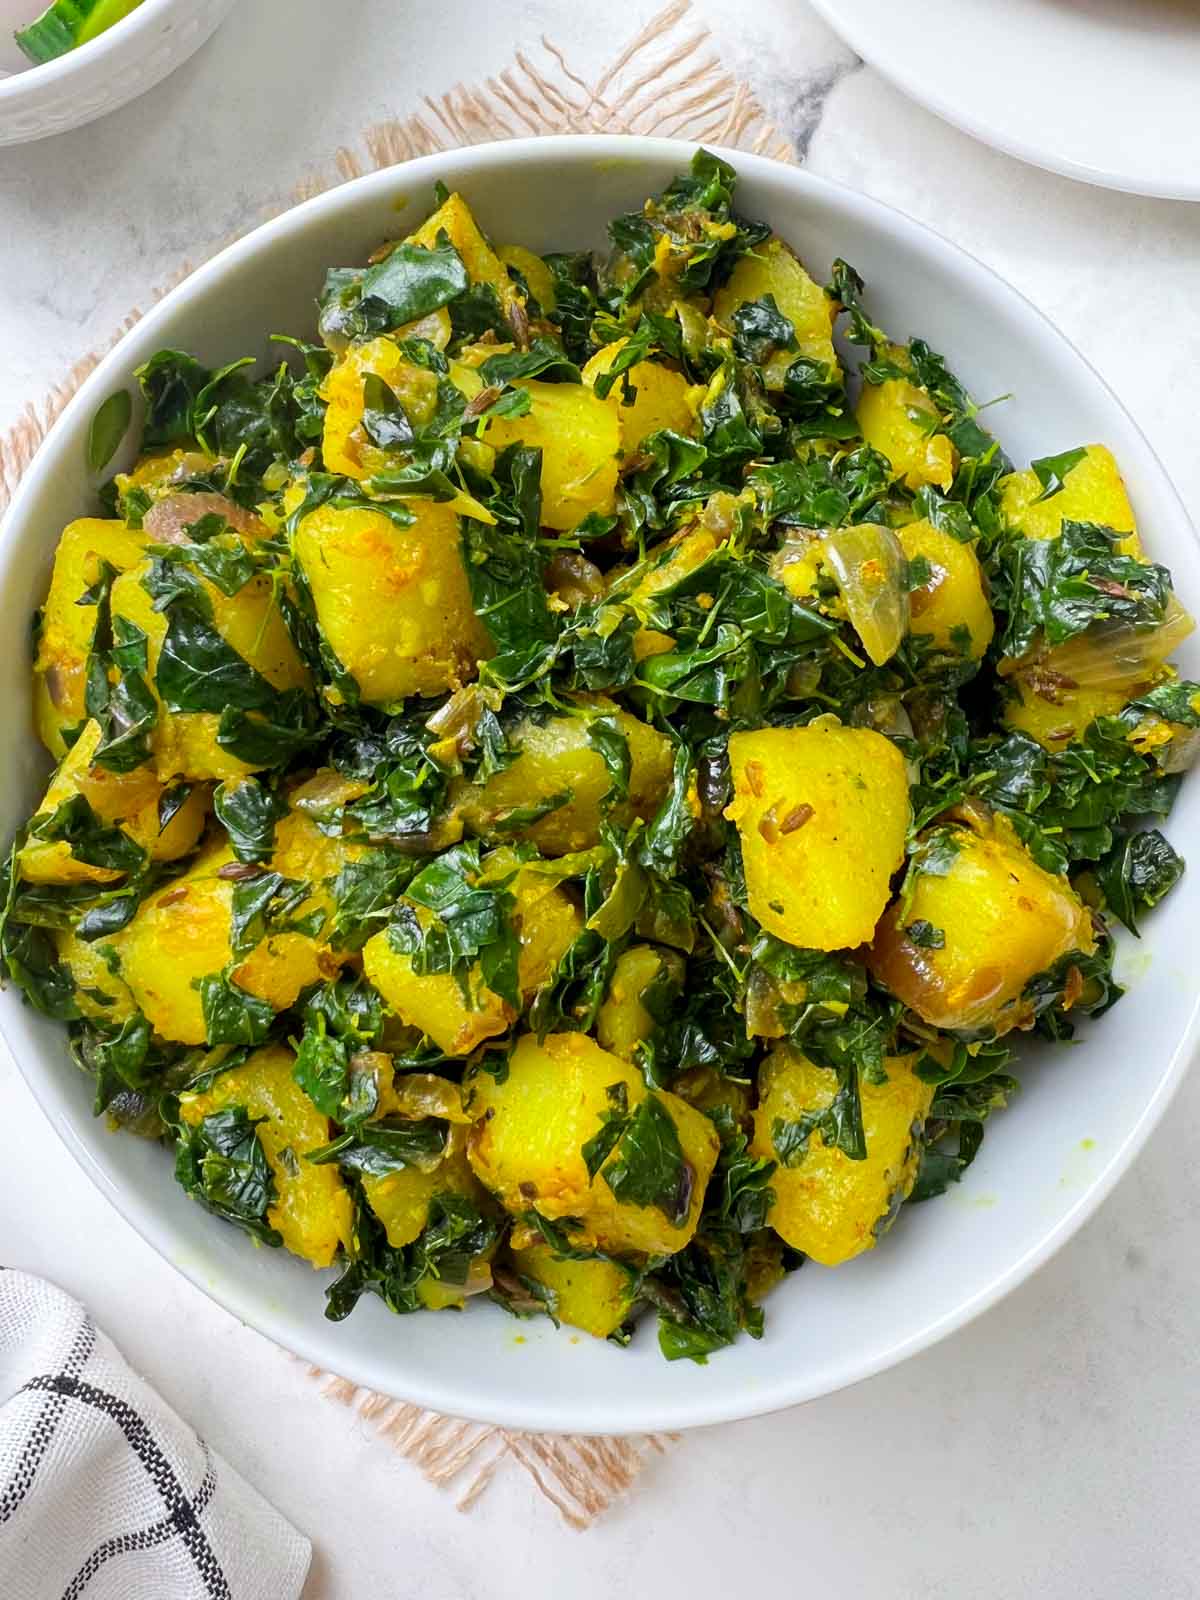 aloo moringa sabzi (potato moringa leaves) served in a bowl